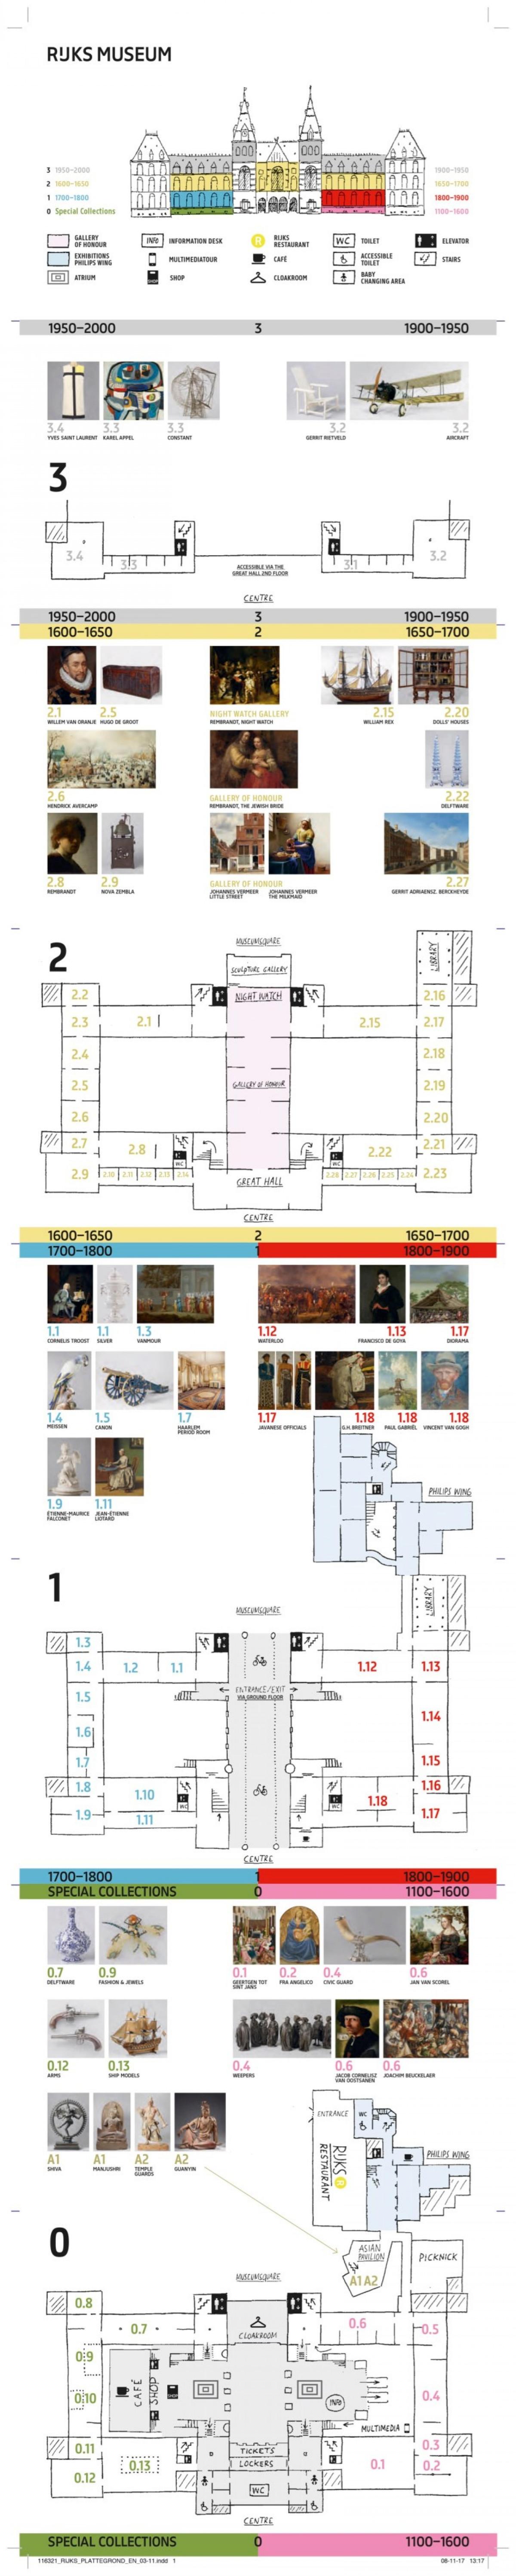 map of rijksmuseum